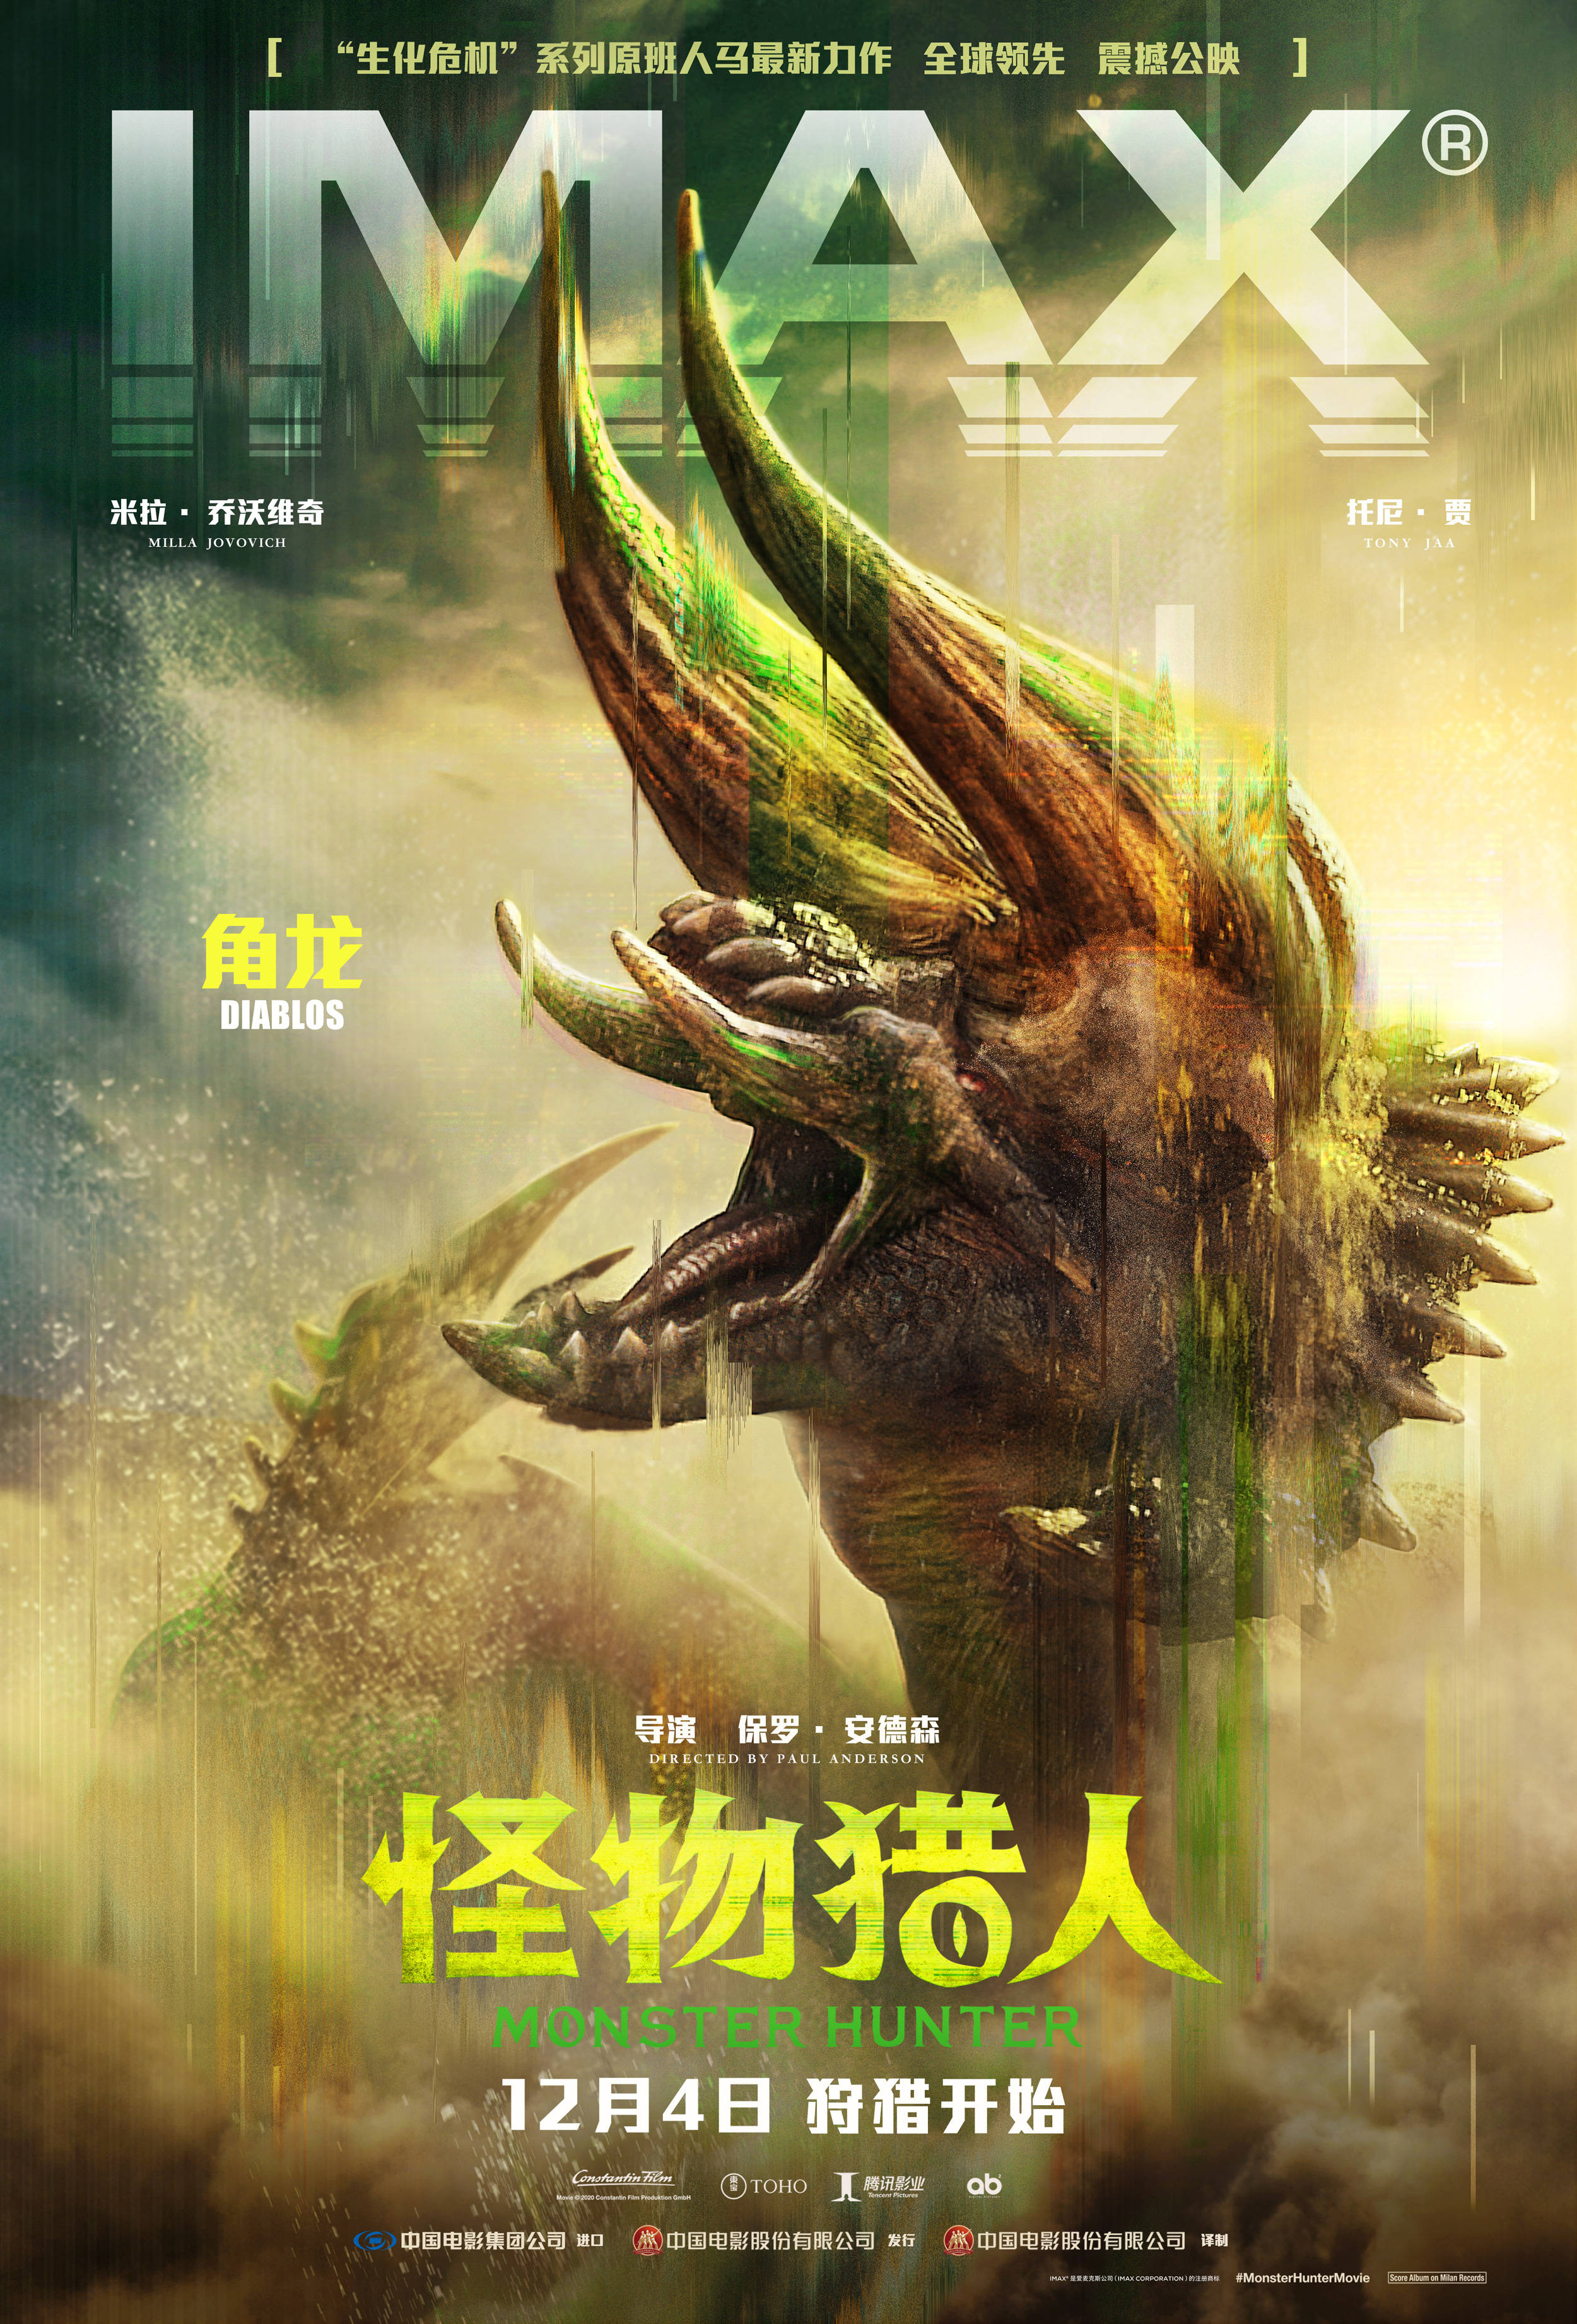 imax发布怪物猎人专属海报12月4日领先全球登陆全国imax影院